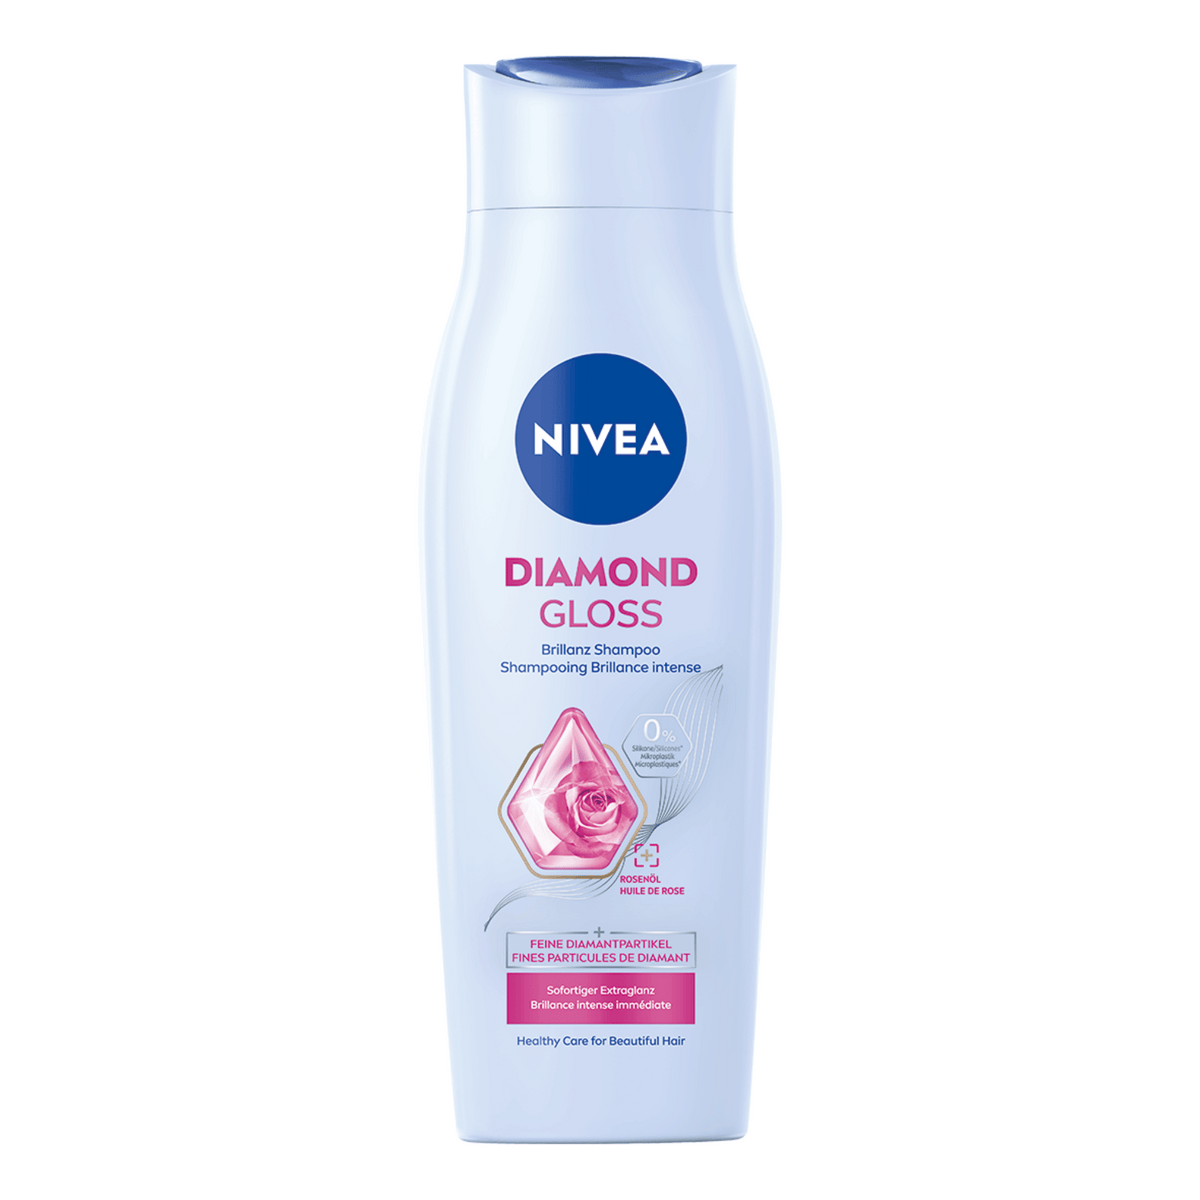 Primary Image of Diamond Gloss Shampoo